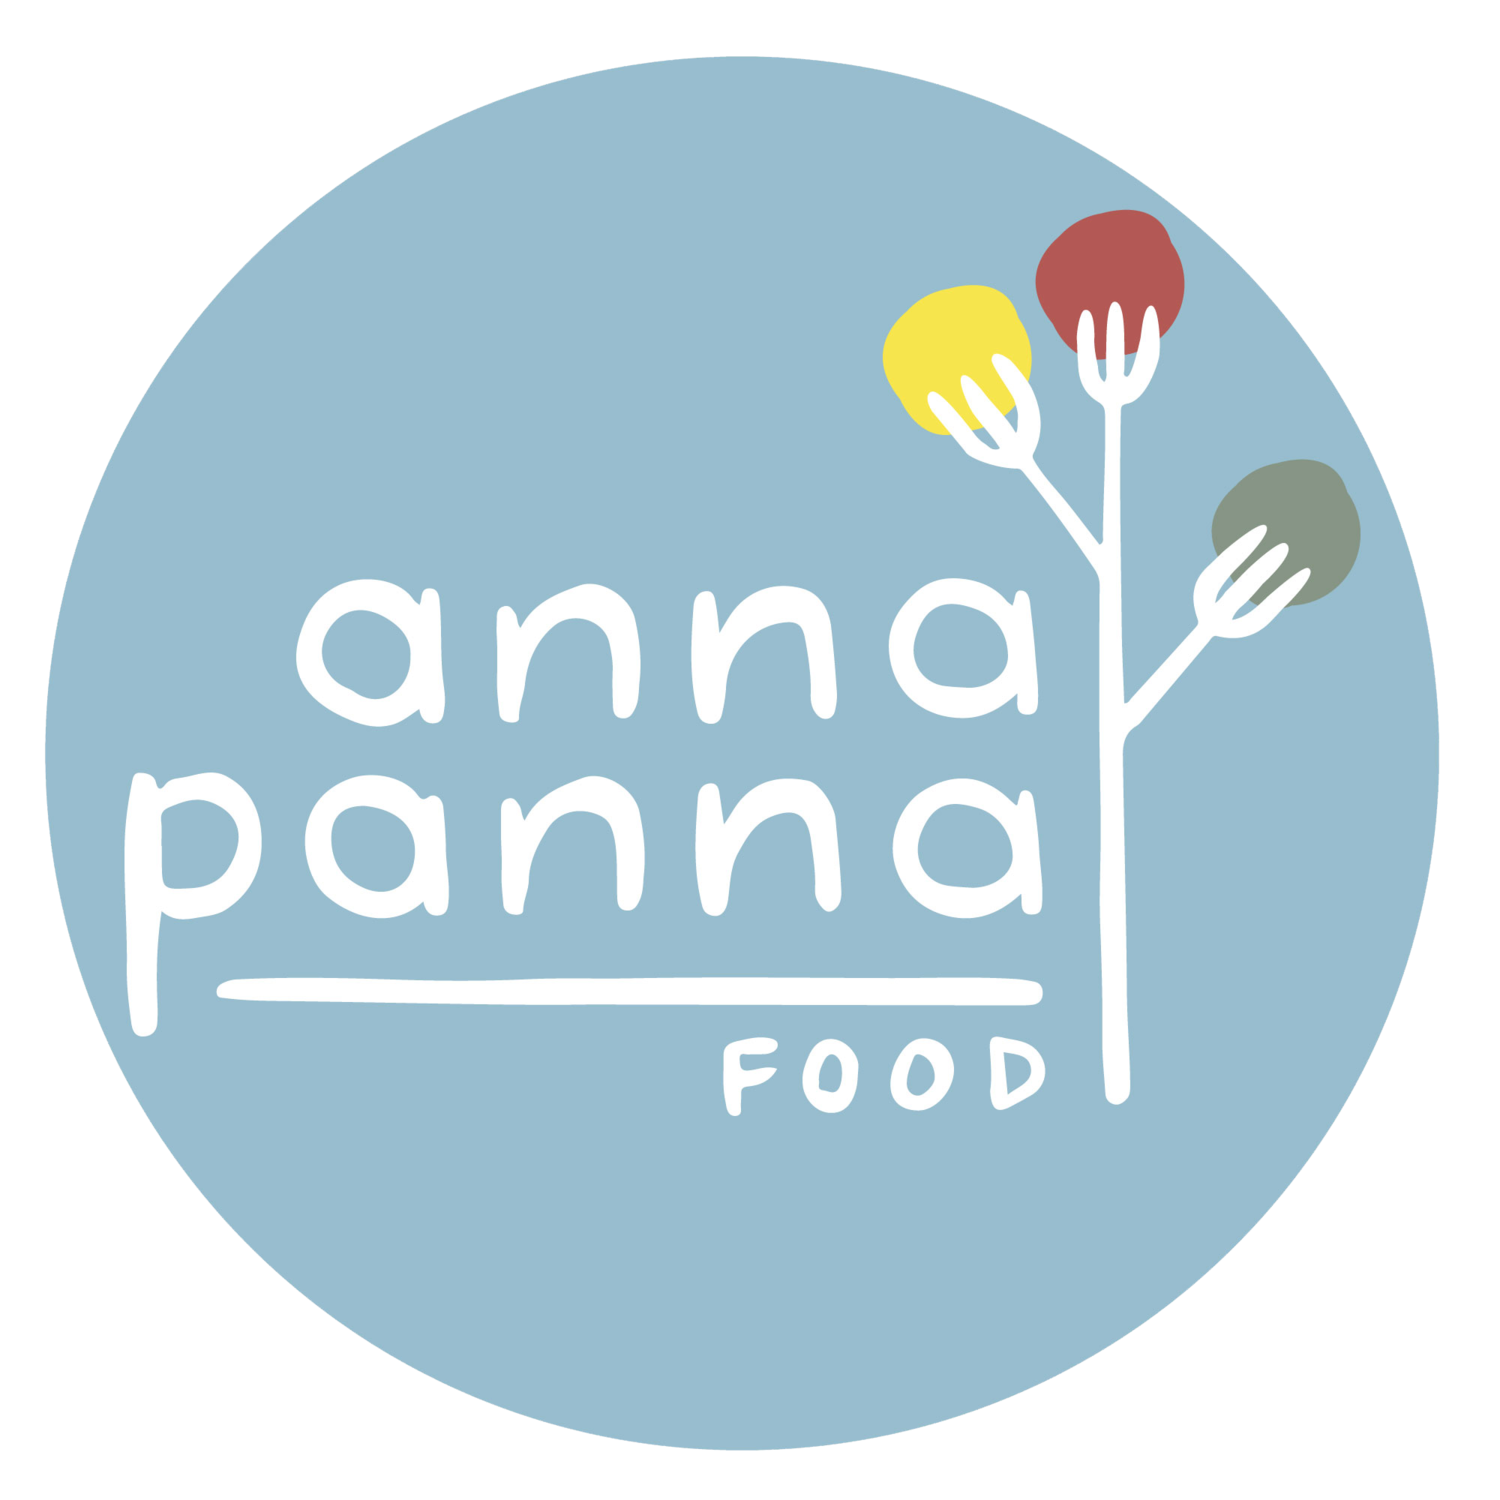 Anna Panna Food